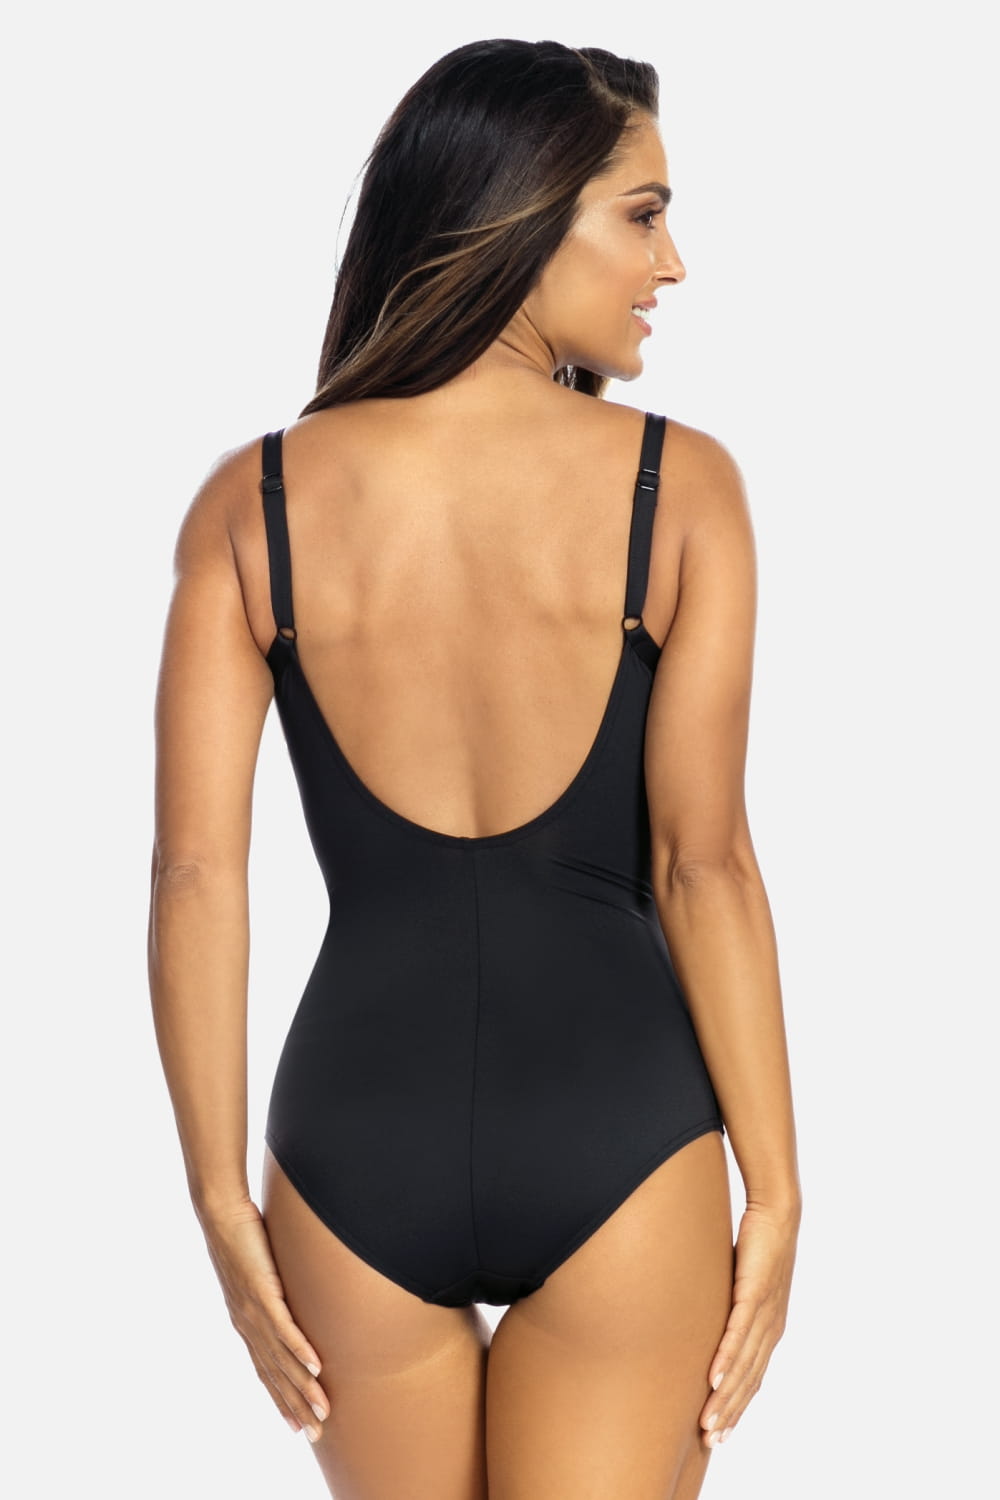 Axami Luxury Swimwear F30 Slimming One Piece Swimsuit Black/Silver